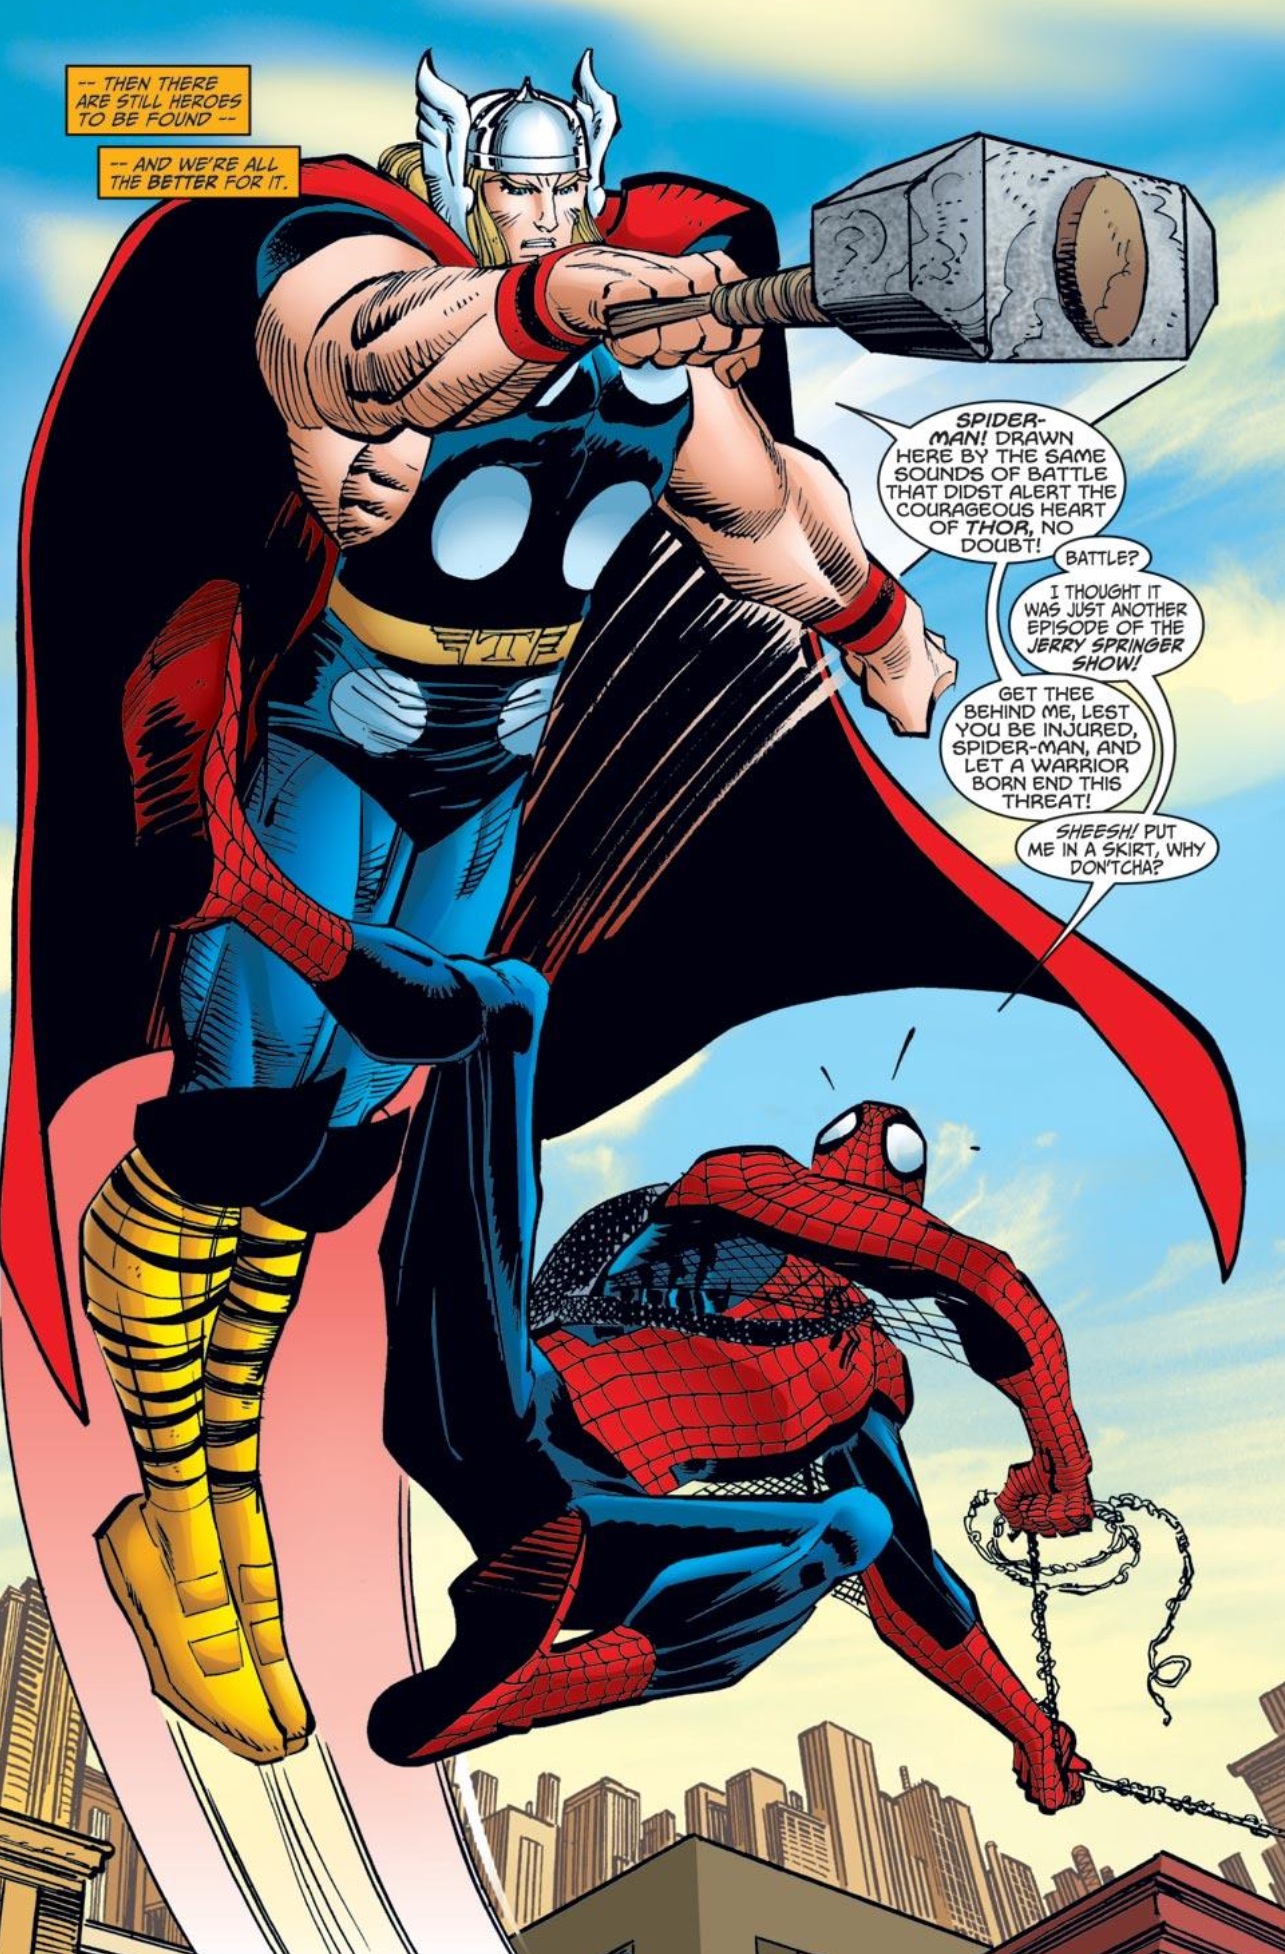 Spider-man versus thor